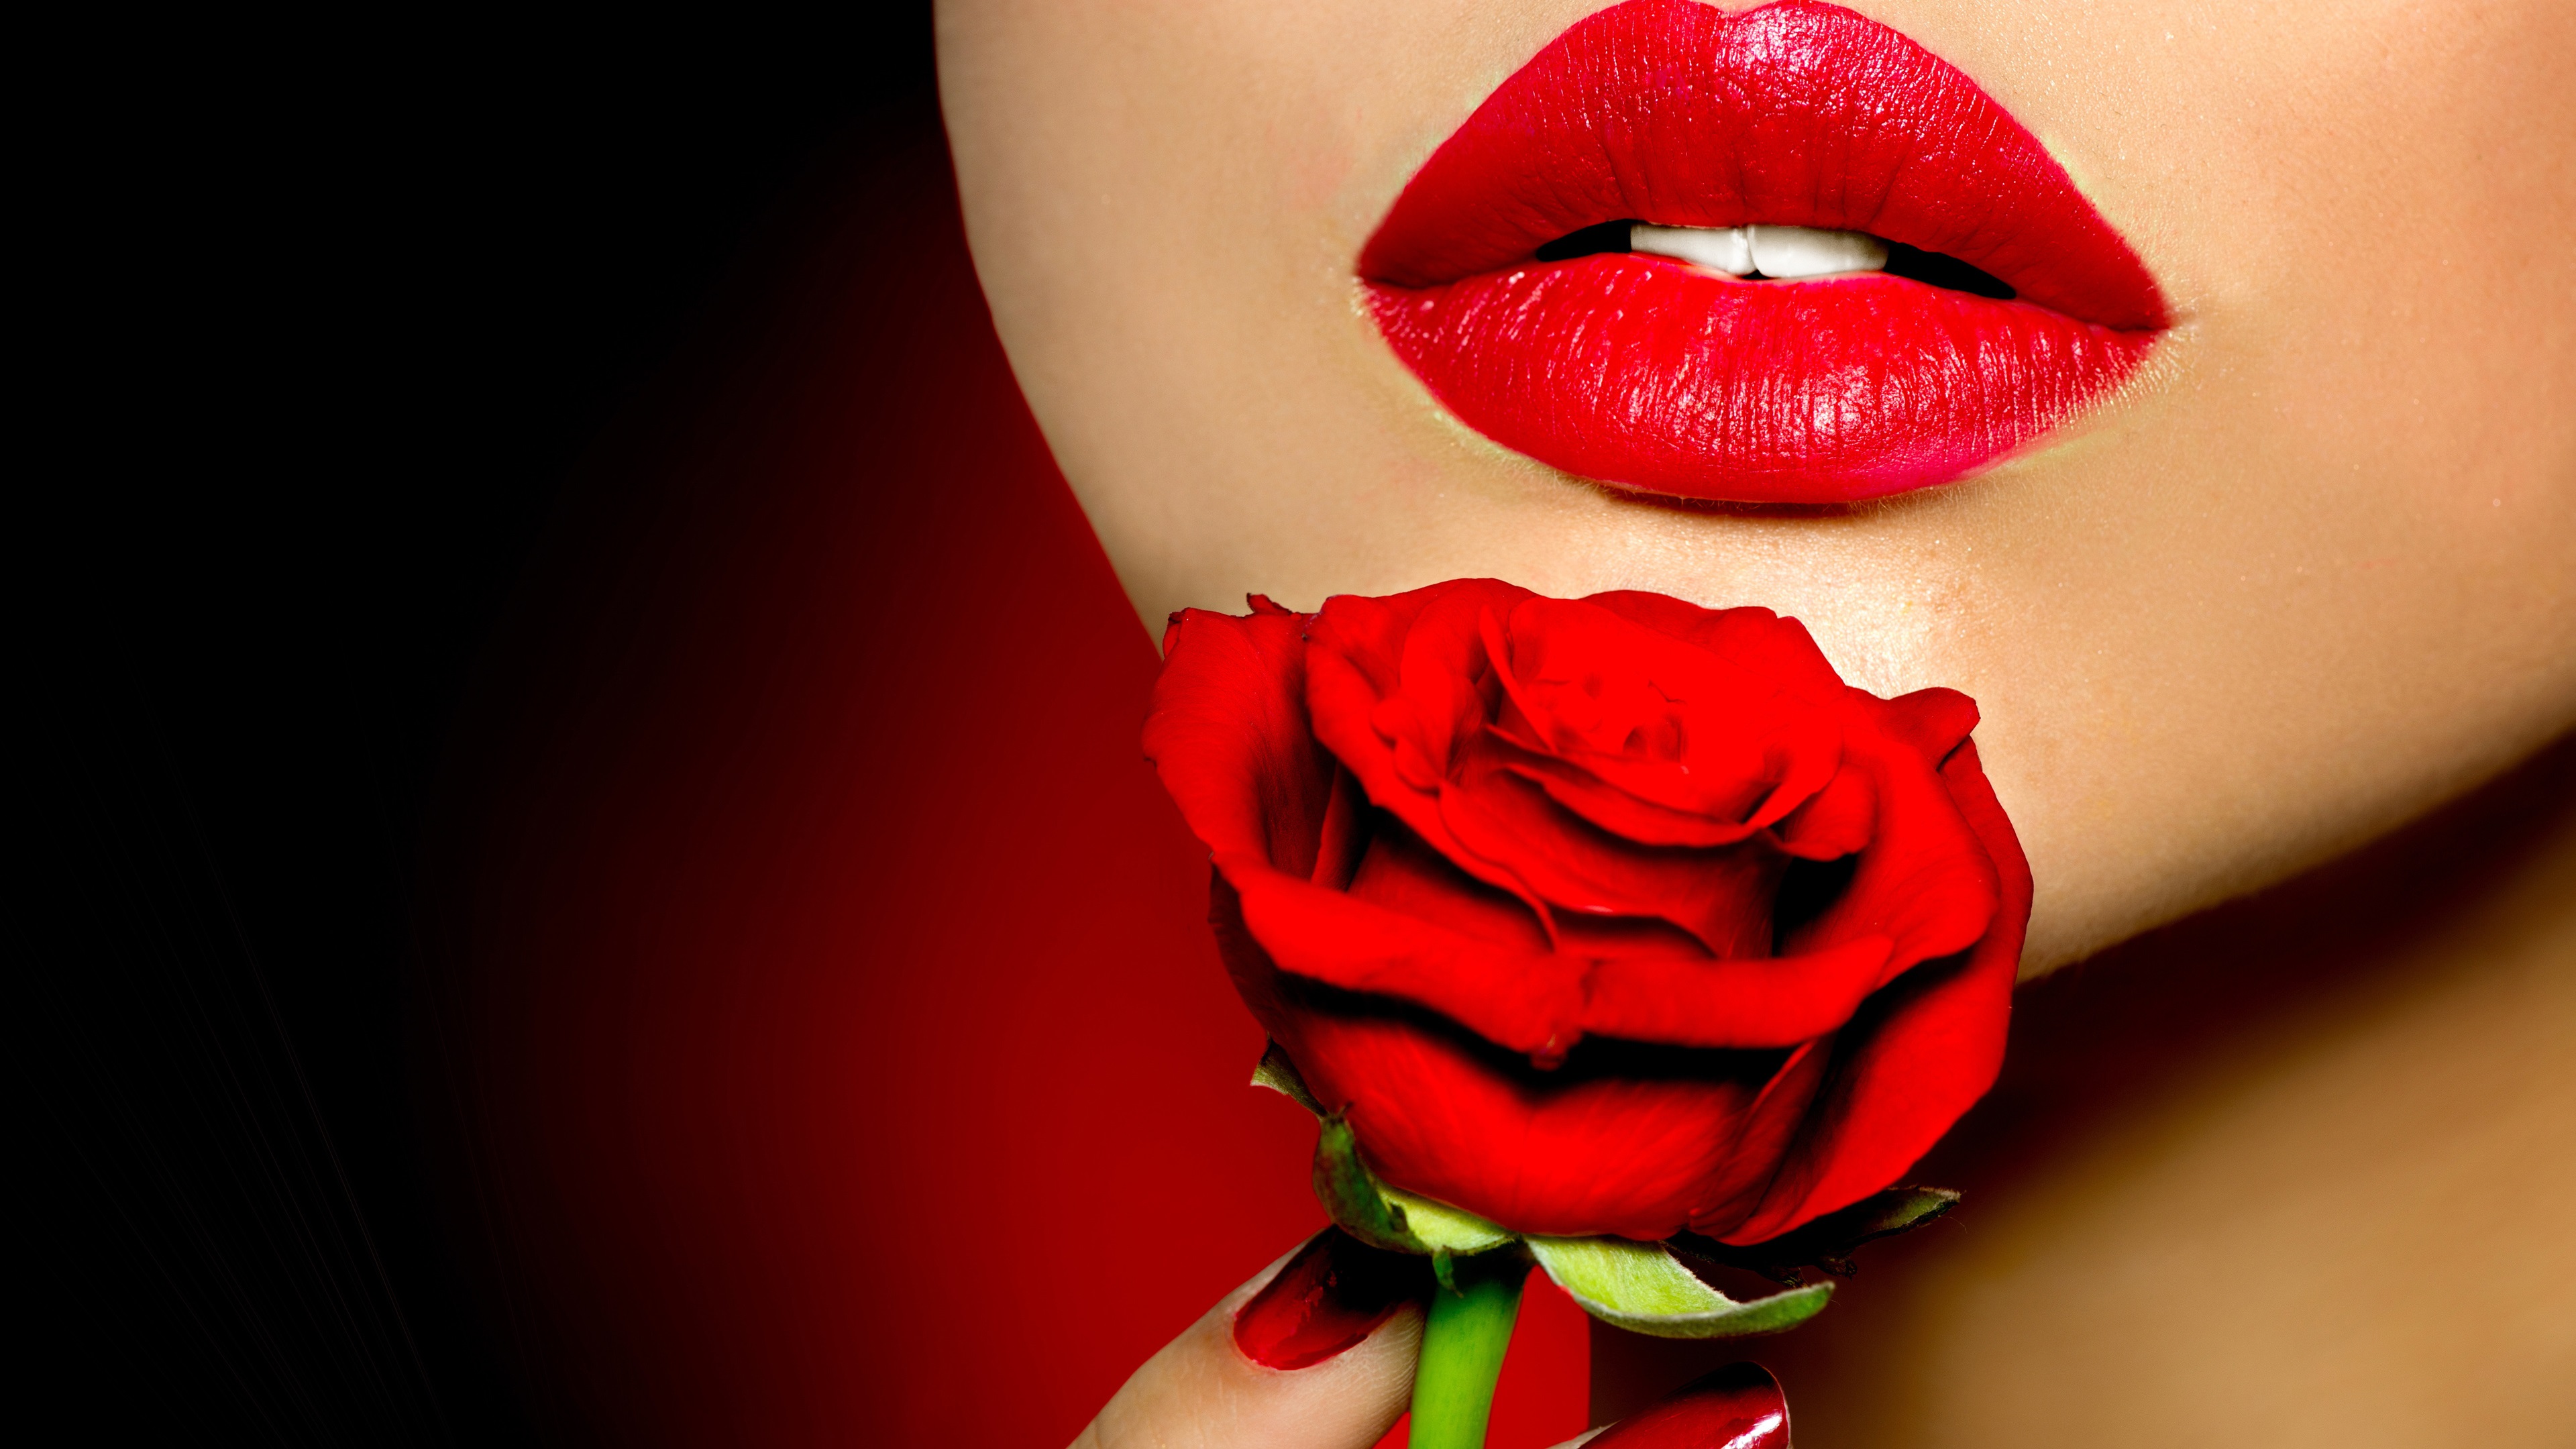 Wallpaper Girl face, lips, lipstick, red rose flower 3840x2160 UHD 4K Picture, Image